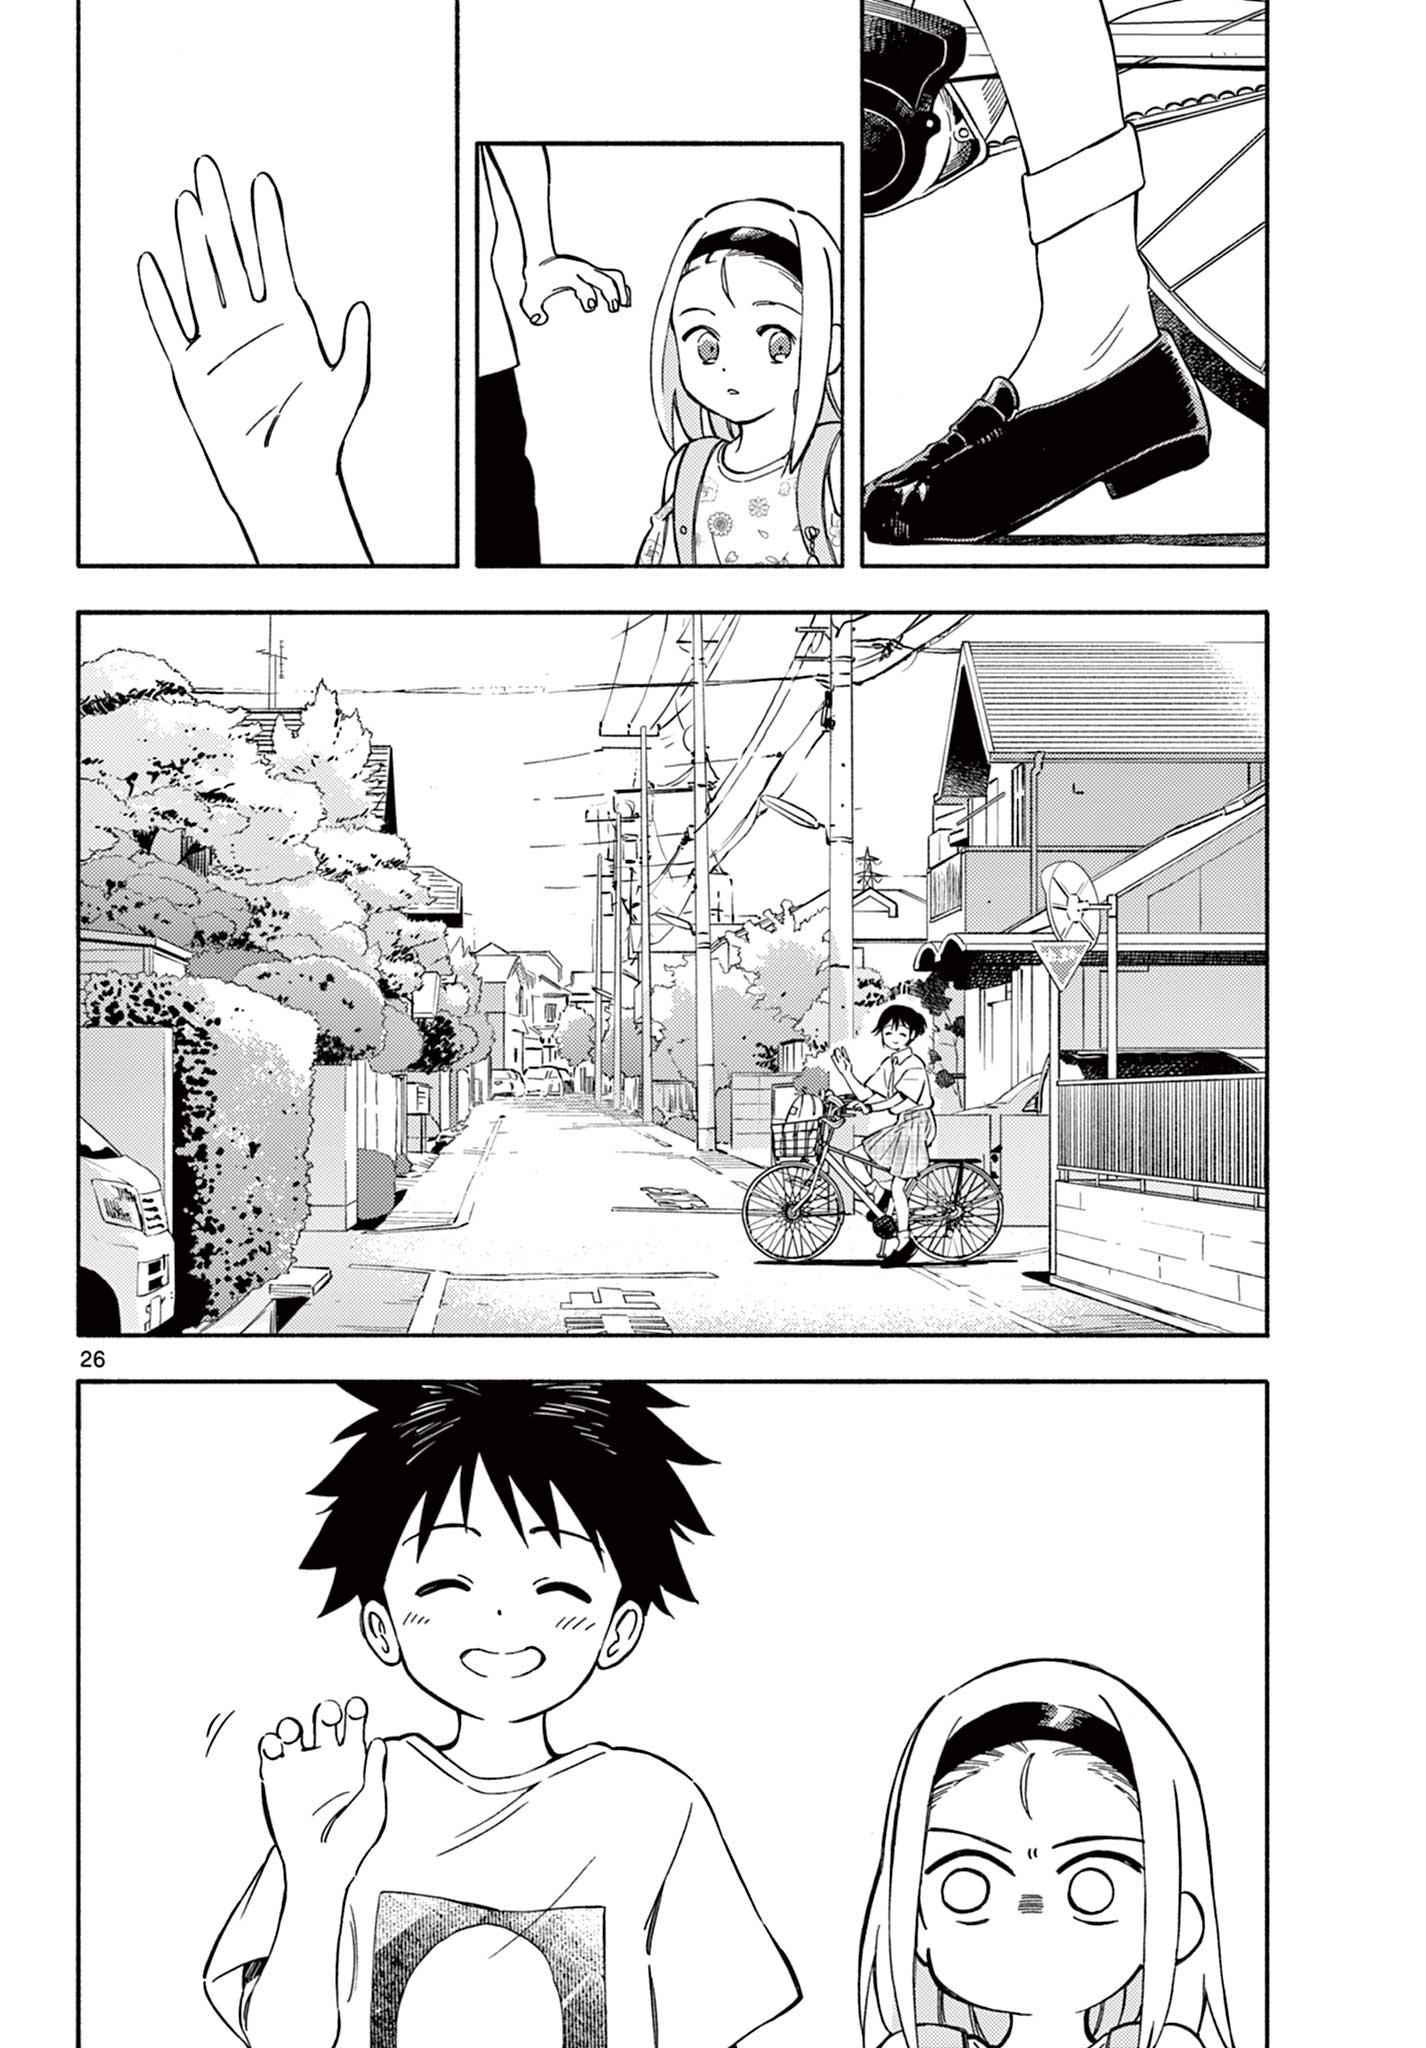 Nami no Shijima no Horizont - Chapter 8.2 - Page 12